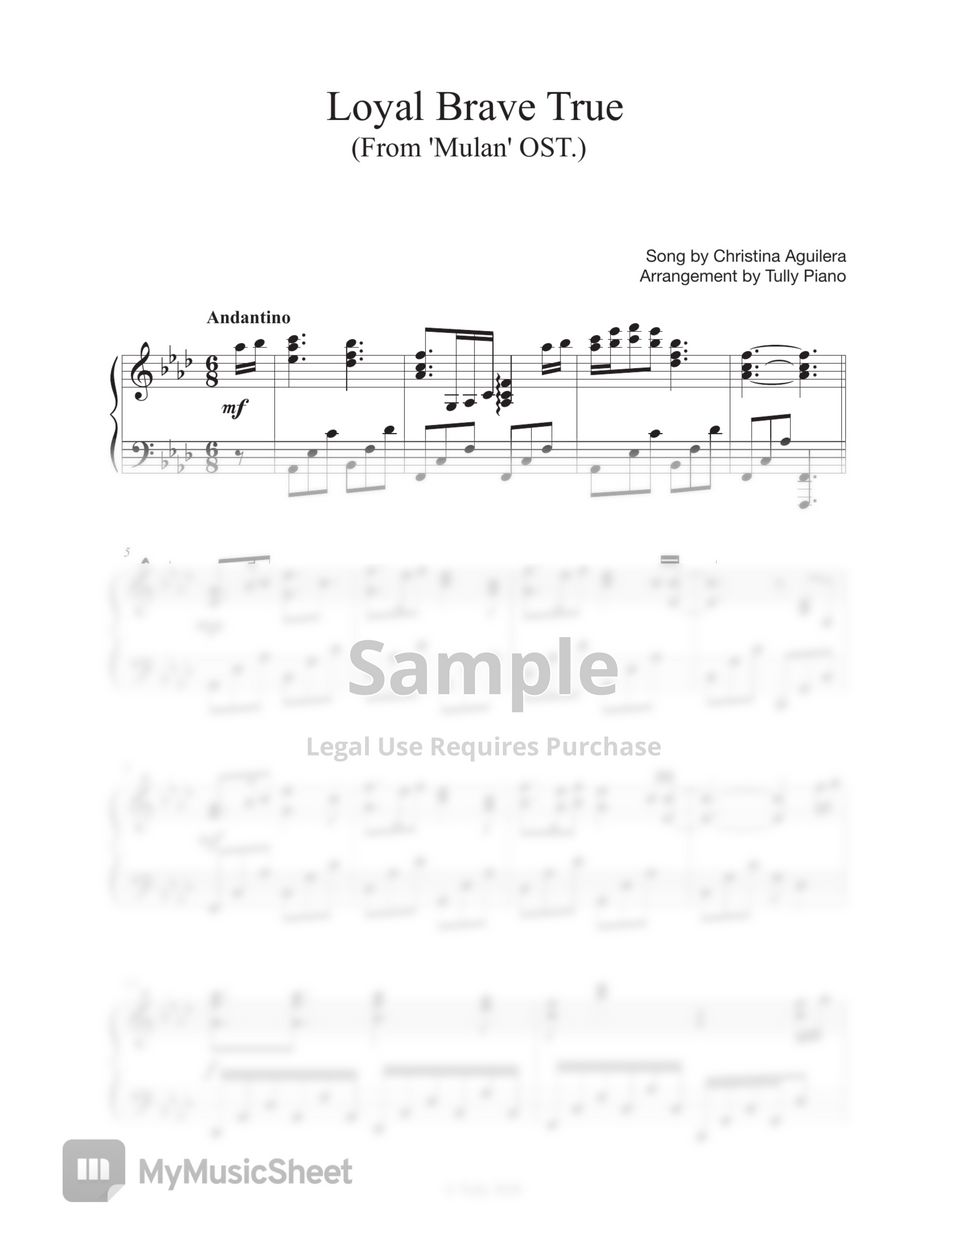 Mulan(뮬란) OST. (2020) - Loyal Brave True (Christina Aguilera) by Tully Piano